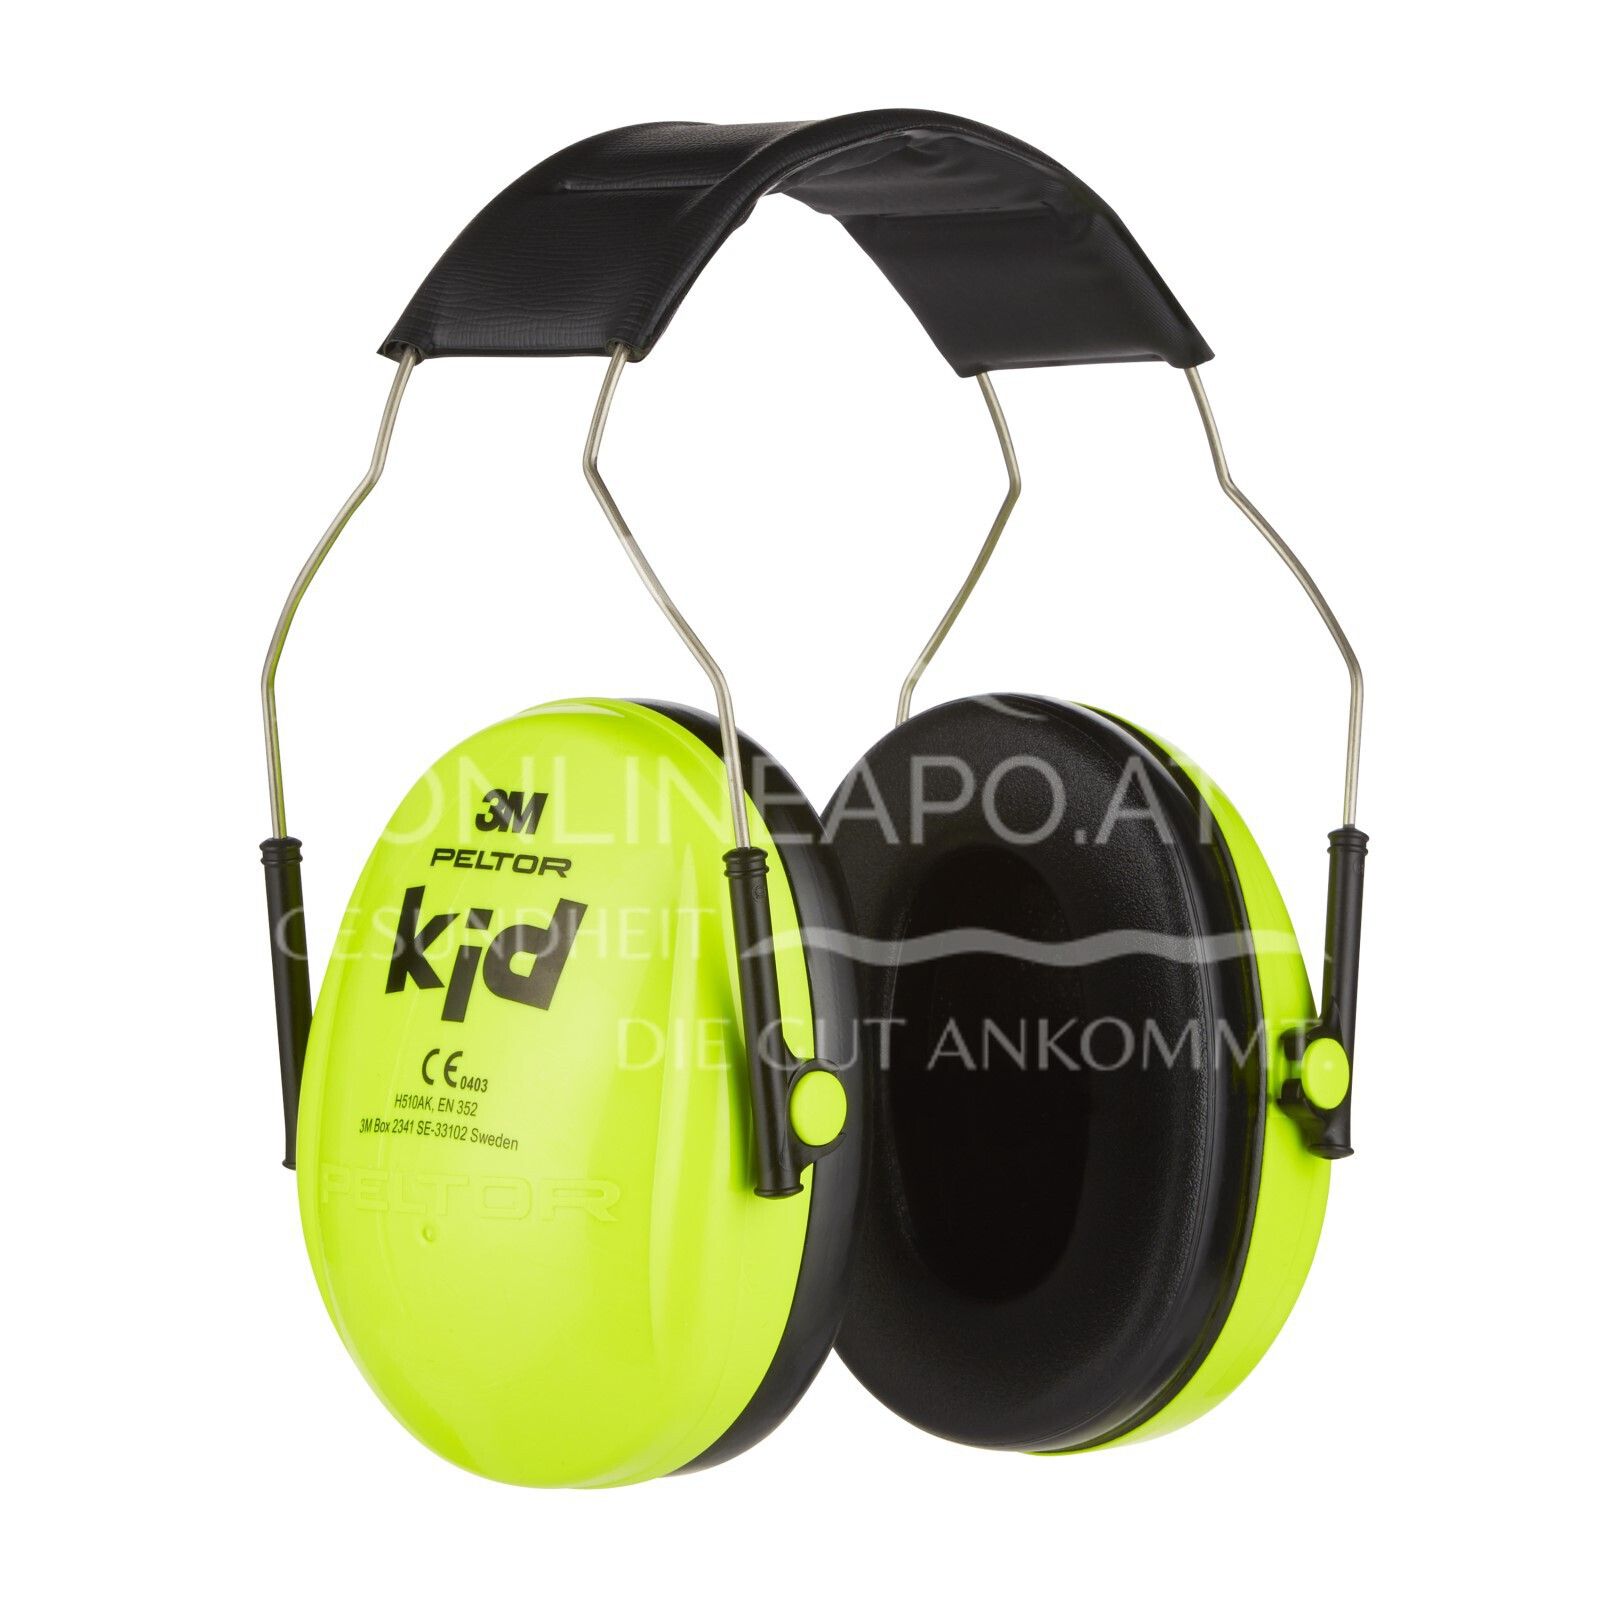 3M™ Peltor™ Kapselgehörschutz für Kinder H510AK, Neongrün (87 bis 98 dB)